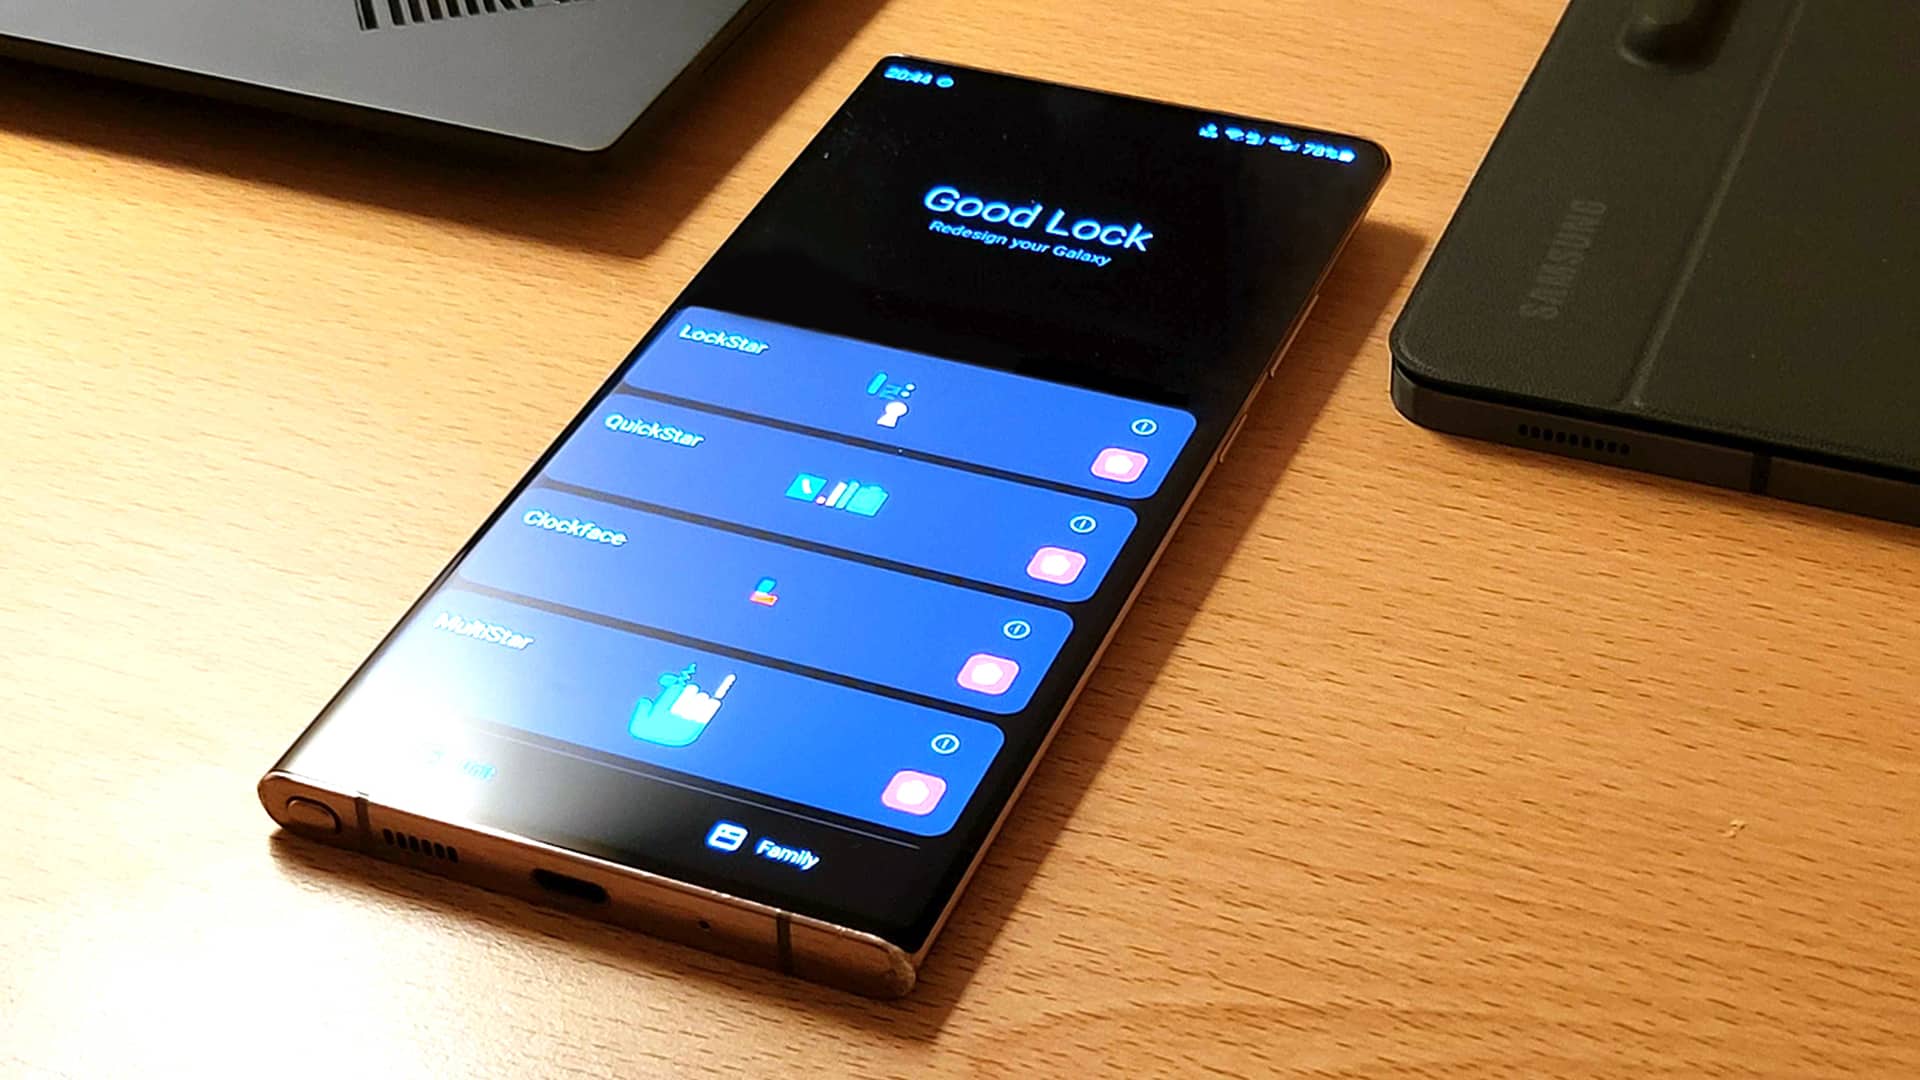 Samsung Good Lock, Η εφαρμογή Samsung Good Lock διαθέσιμη στο Google Play Store